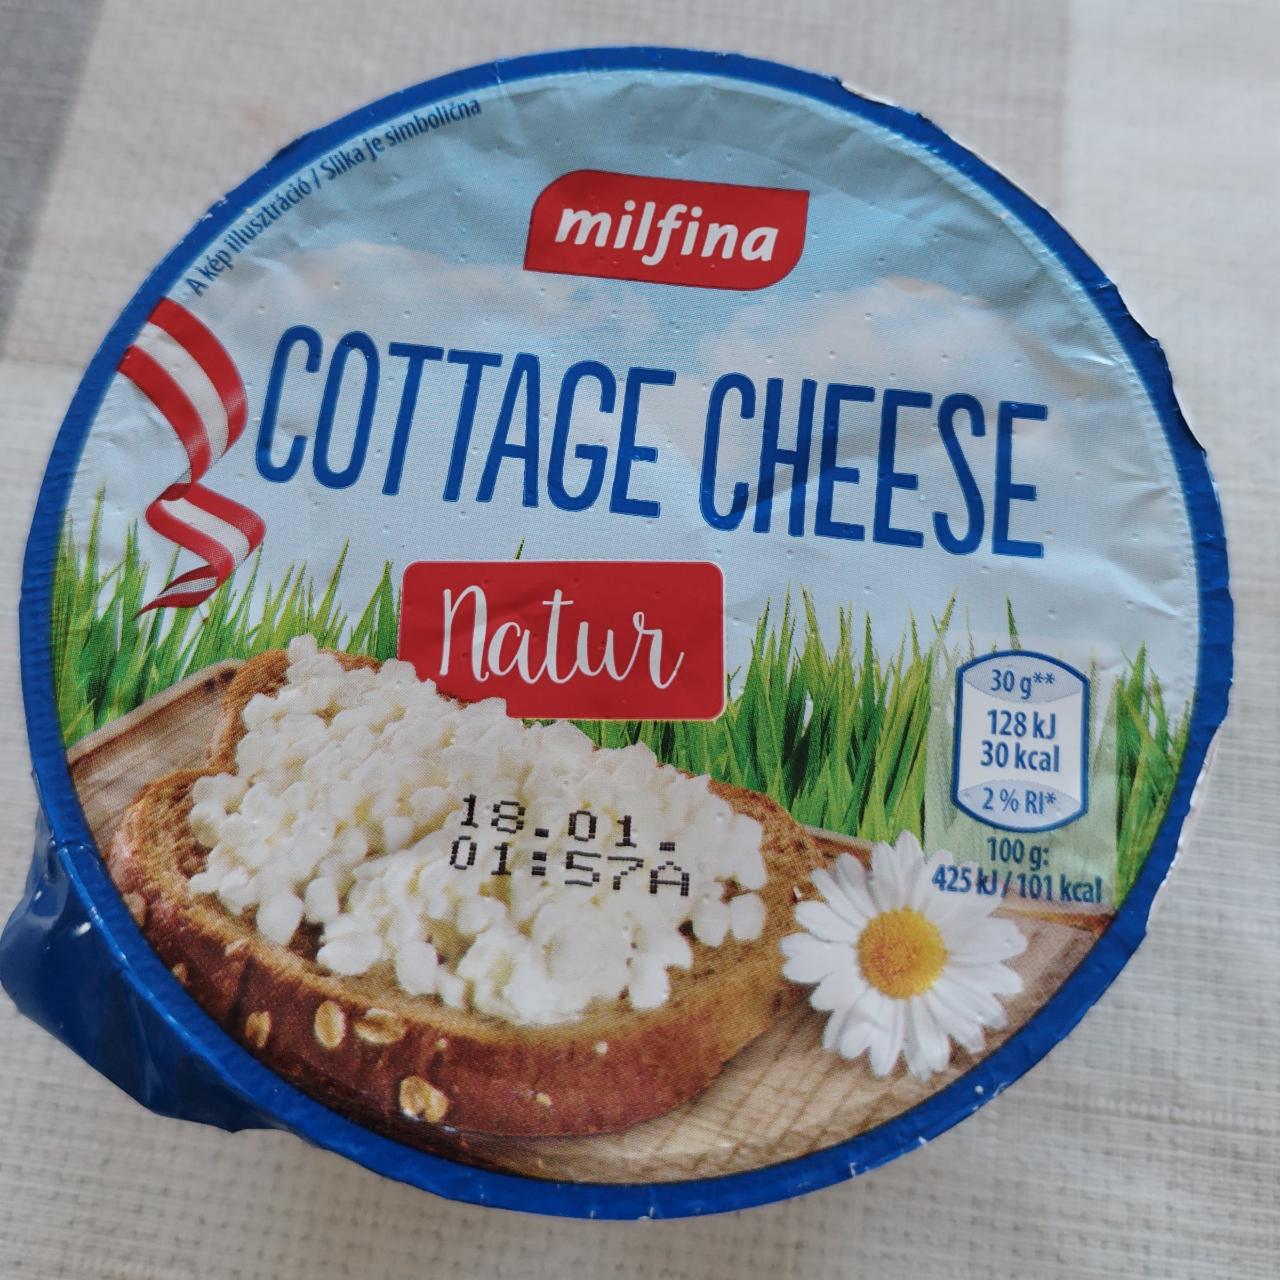 Fotografie - Cottage cheese Natur Milfina